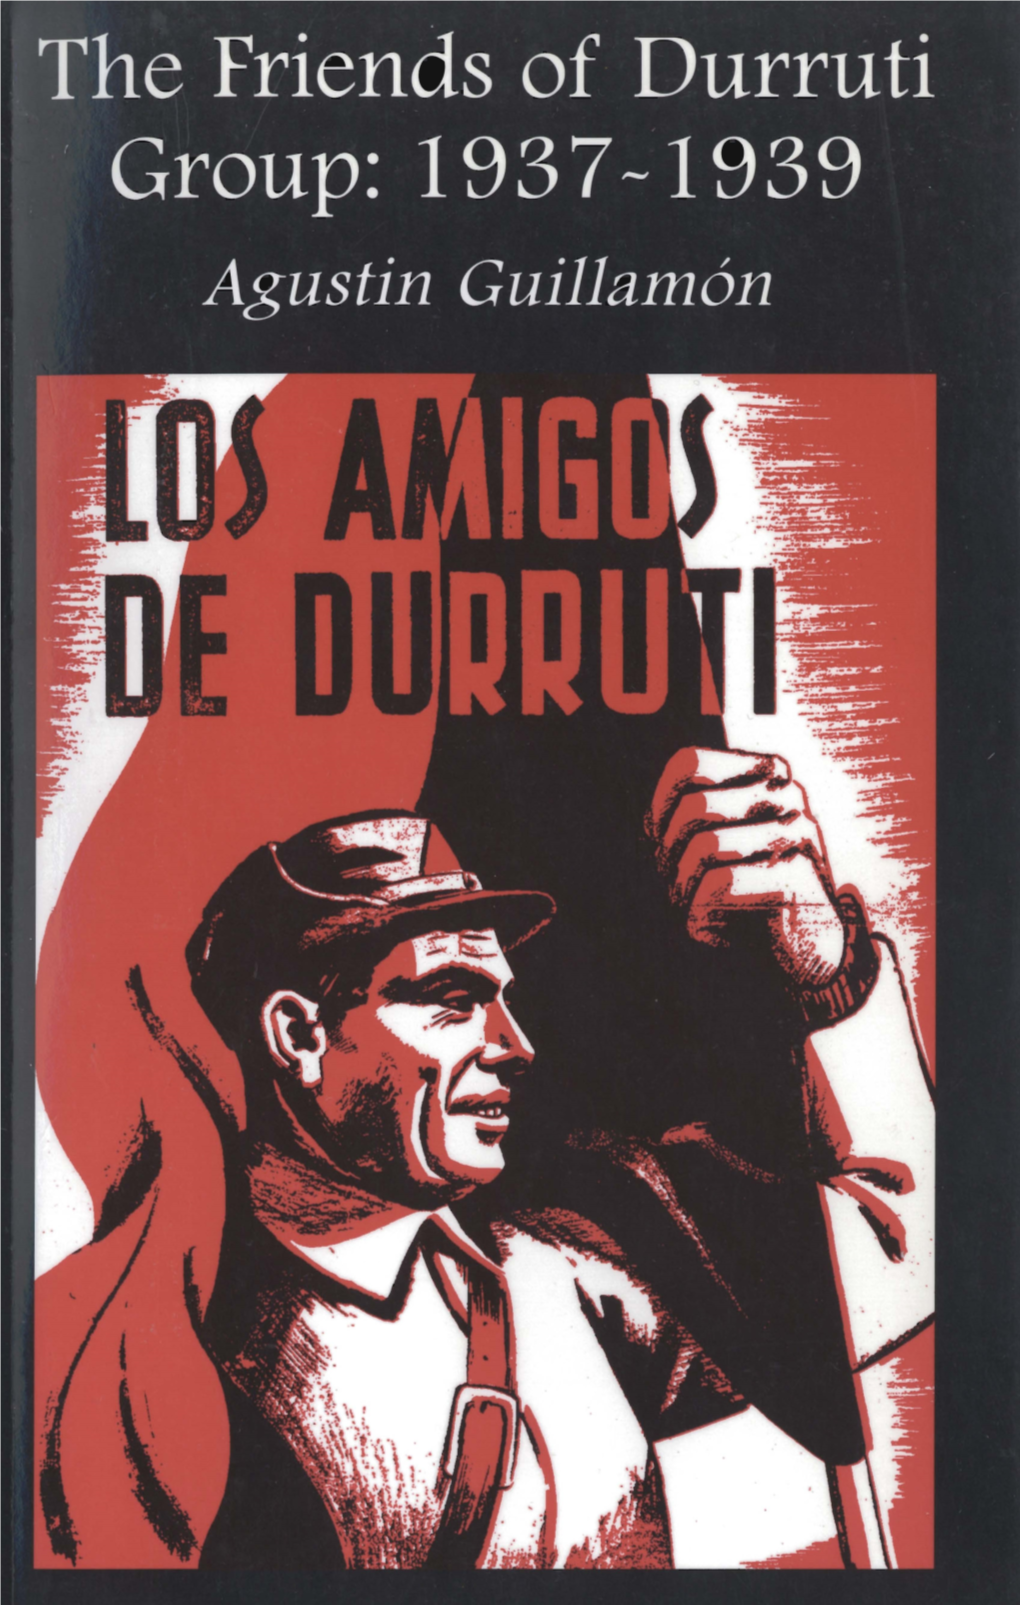 Friends of Durruti Group: 1937-1939